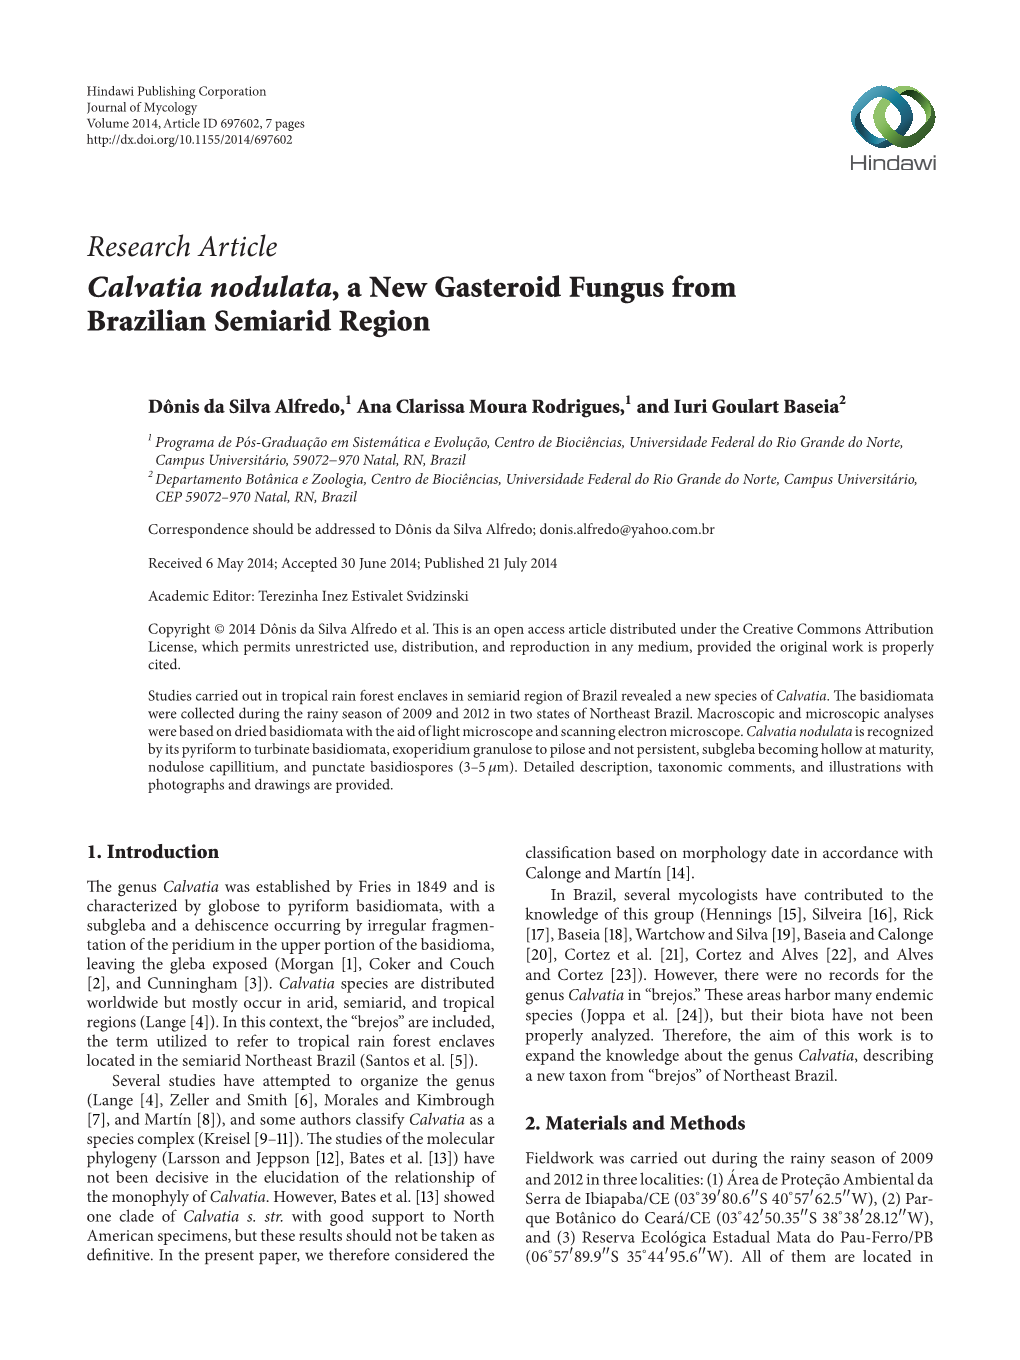 Research Article Calvatia Nodulata, a New Gasteroid Fungus from Brazilian Semiarid Region